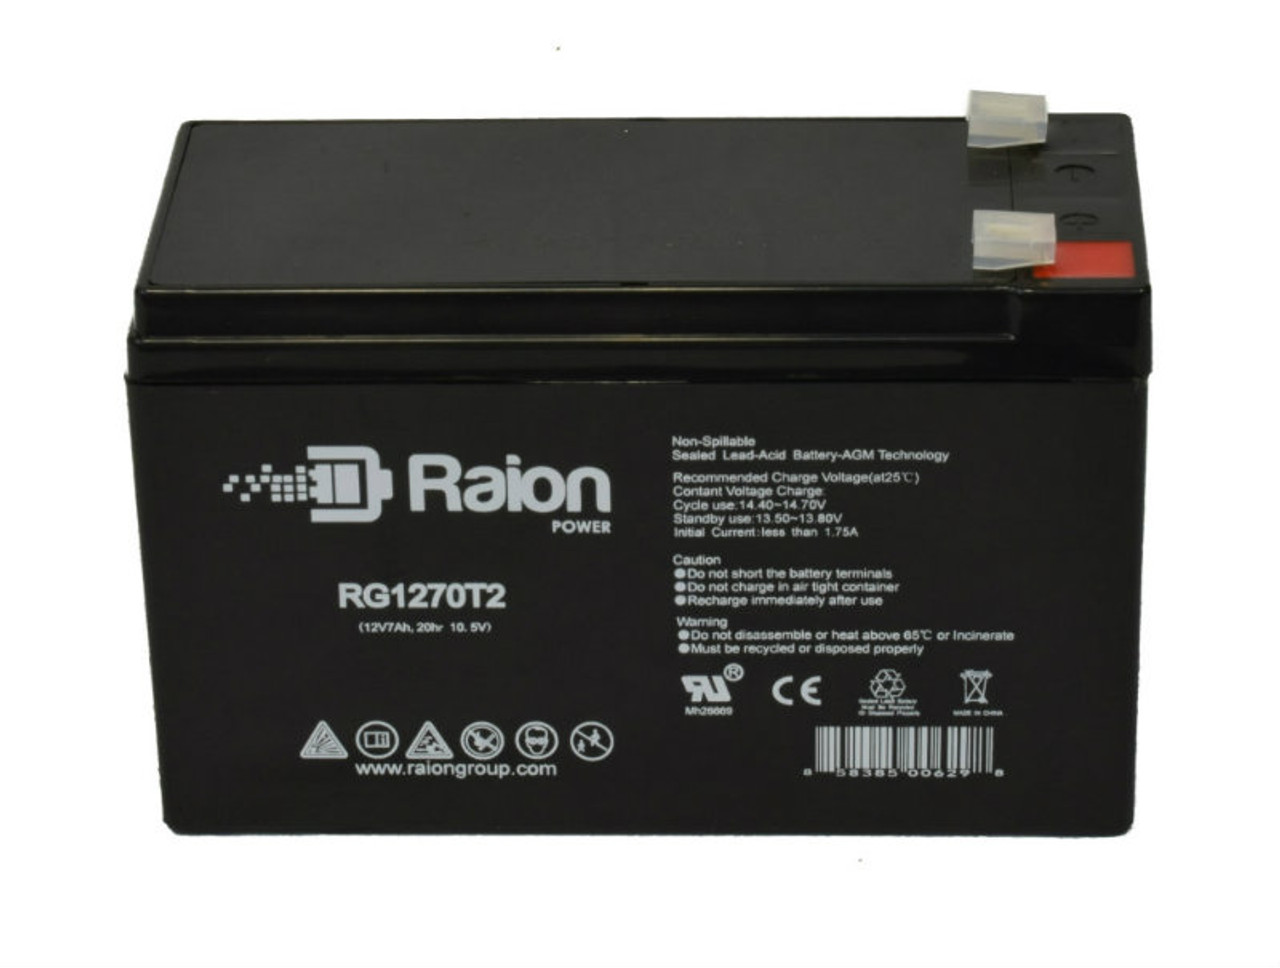 Raion Power RG1270T1 12V 7Ah Lead Acid Battery for Exell EB1270F1